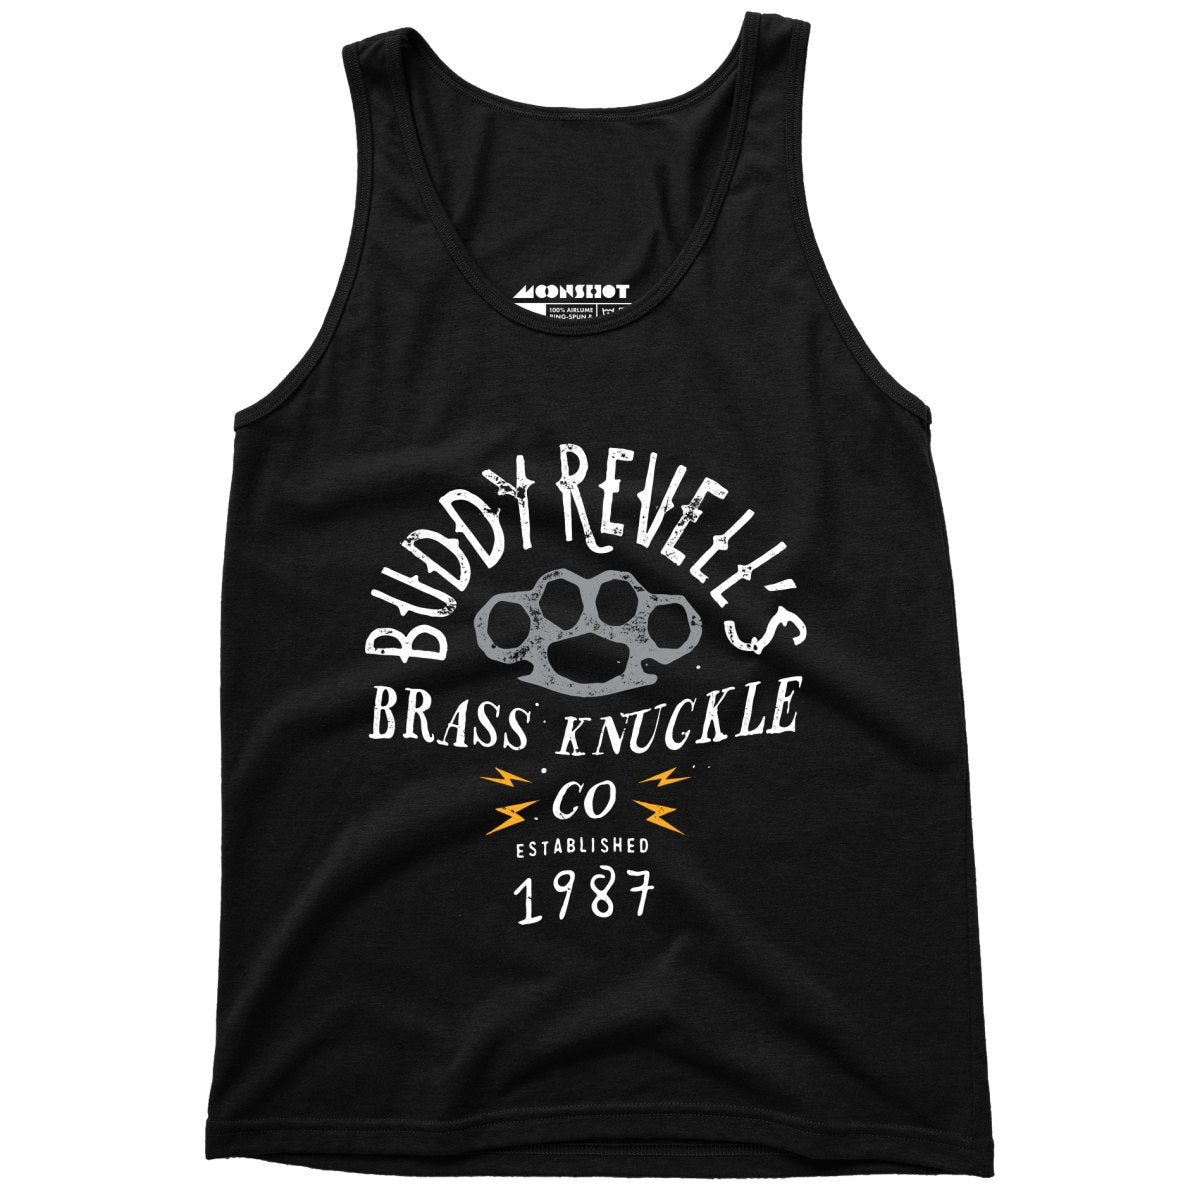 Buddy Revell's Brass Knuckle Co. - Unisex Tank Top - T-Shirt